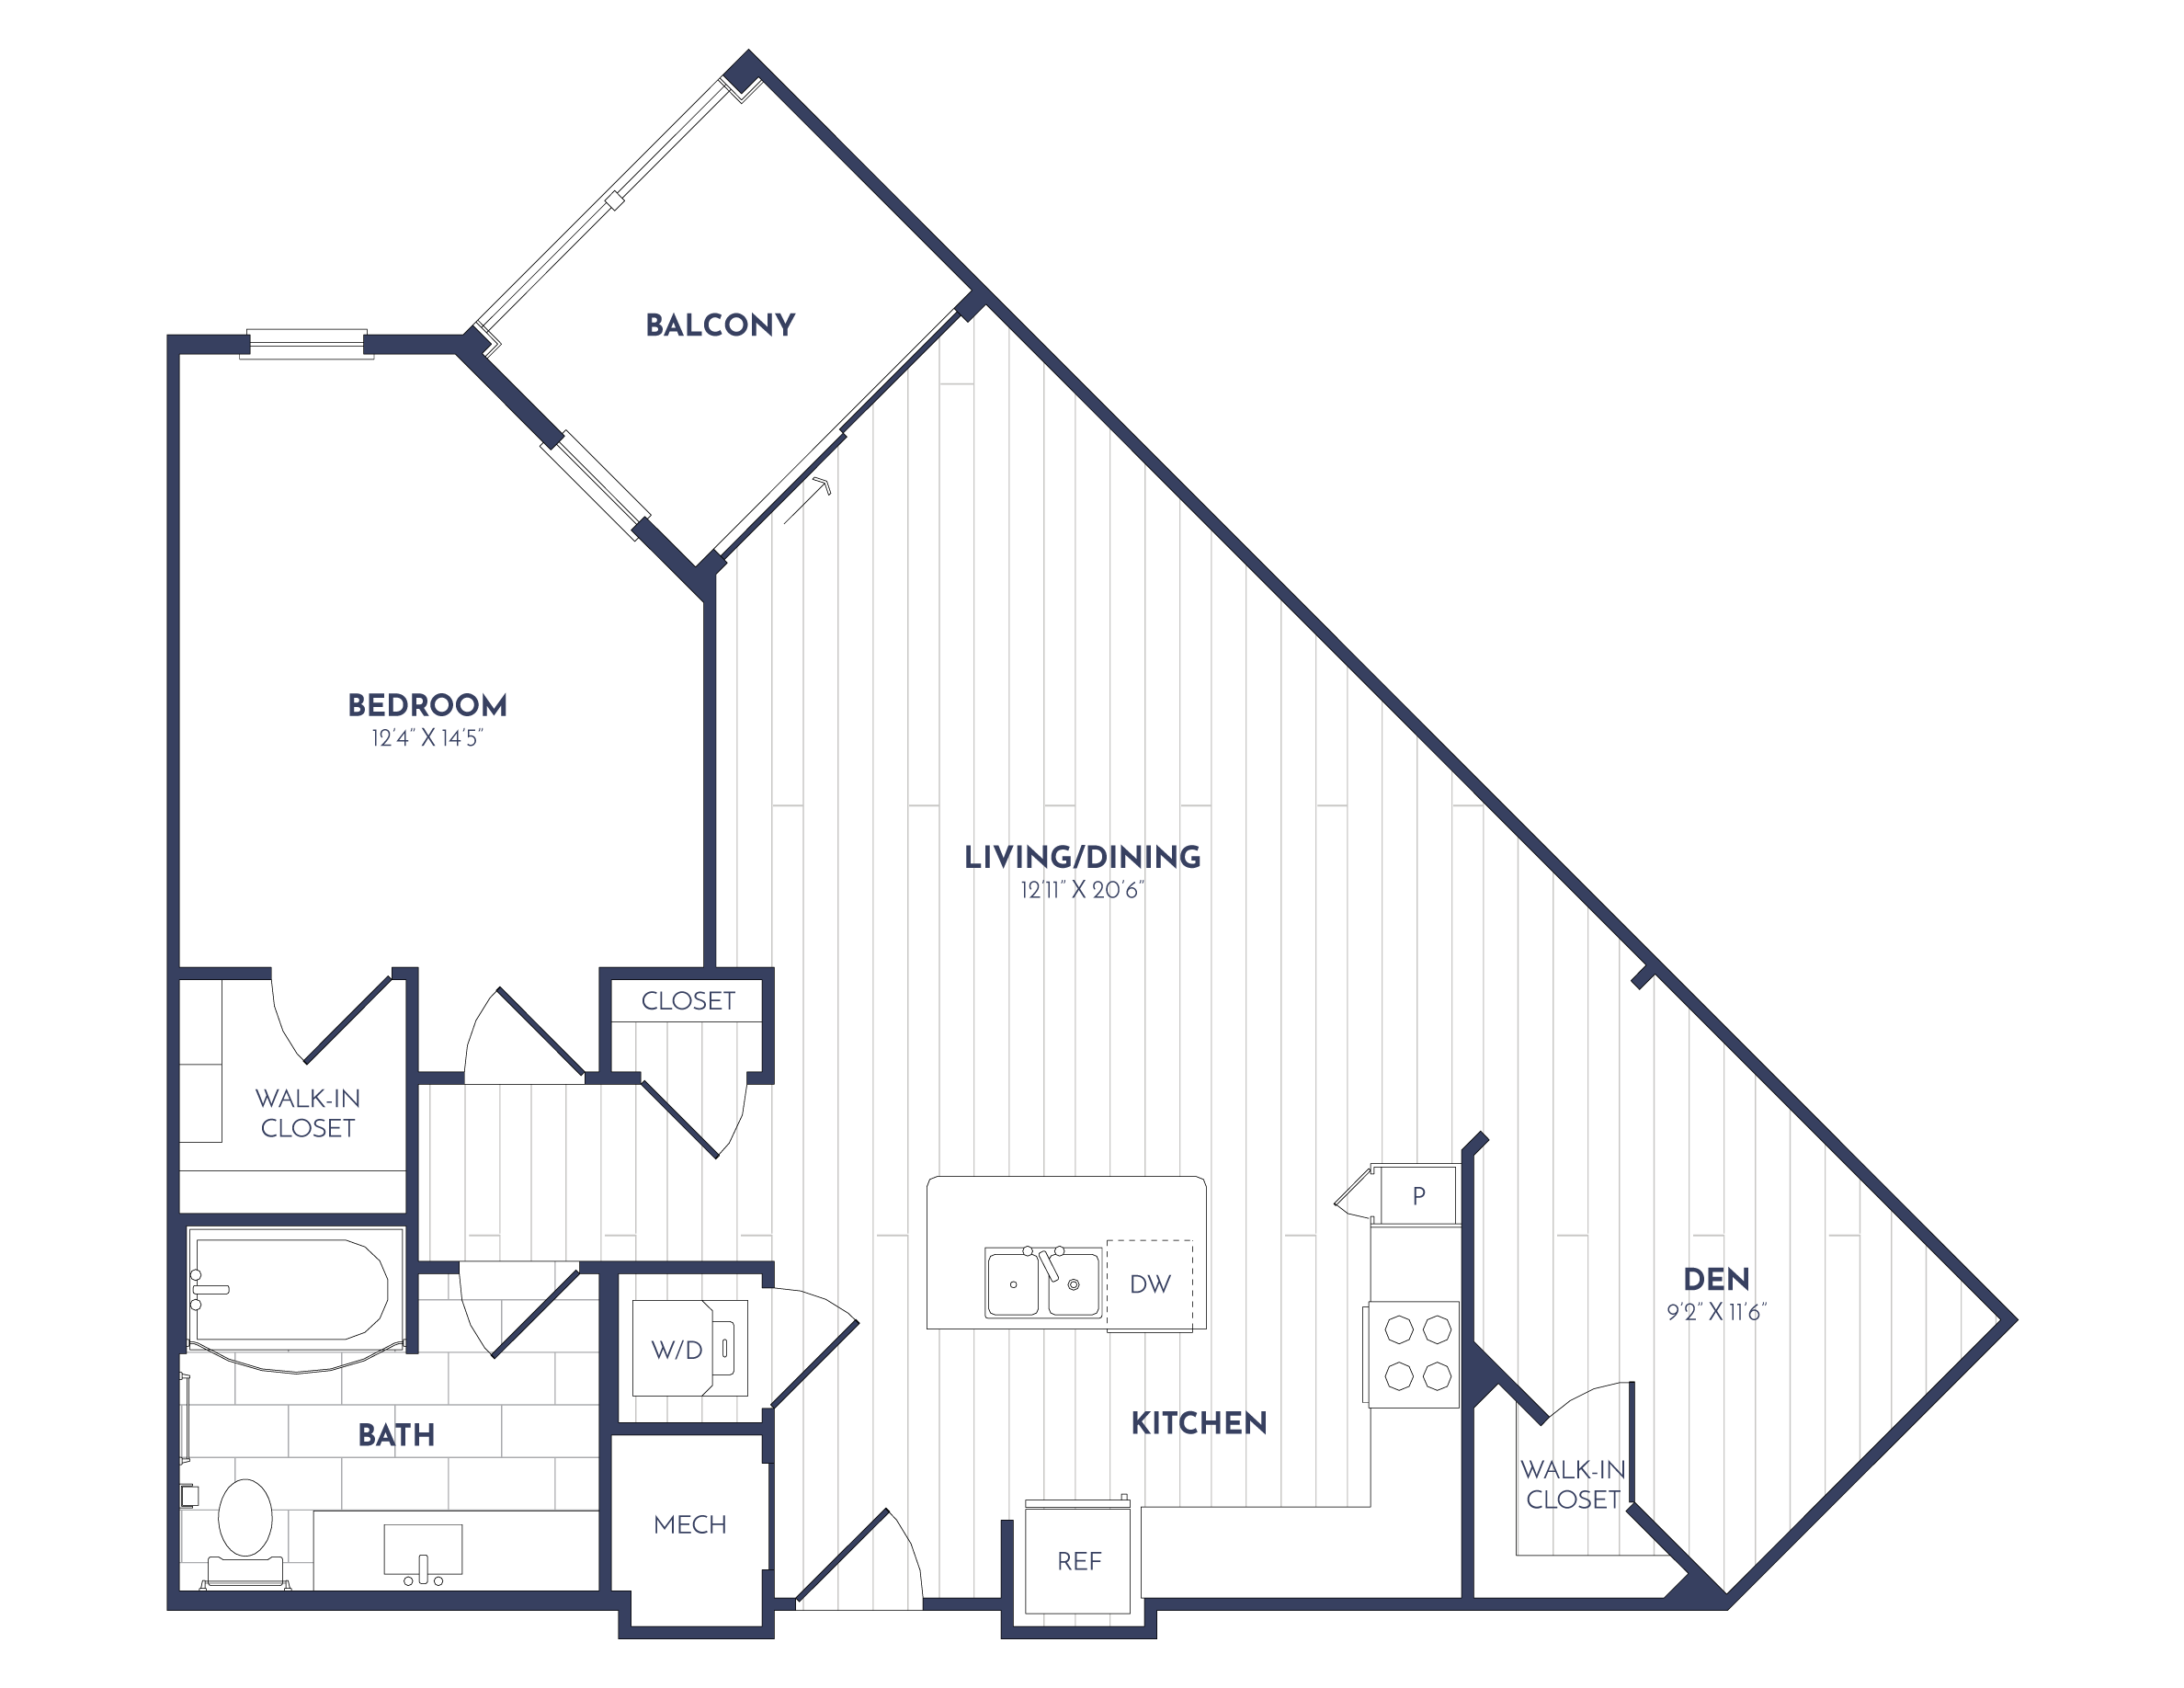 Apartment 220 floorplan